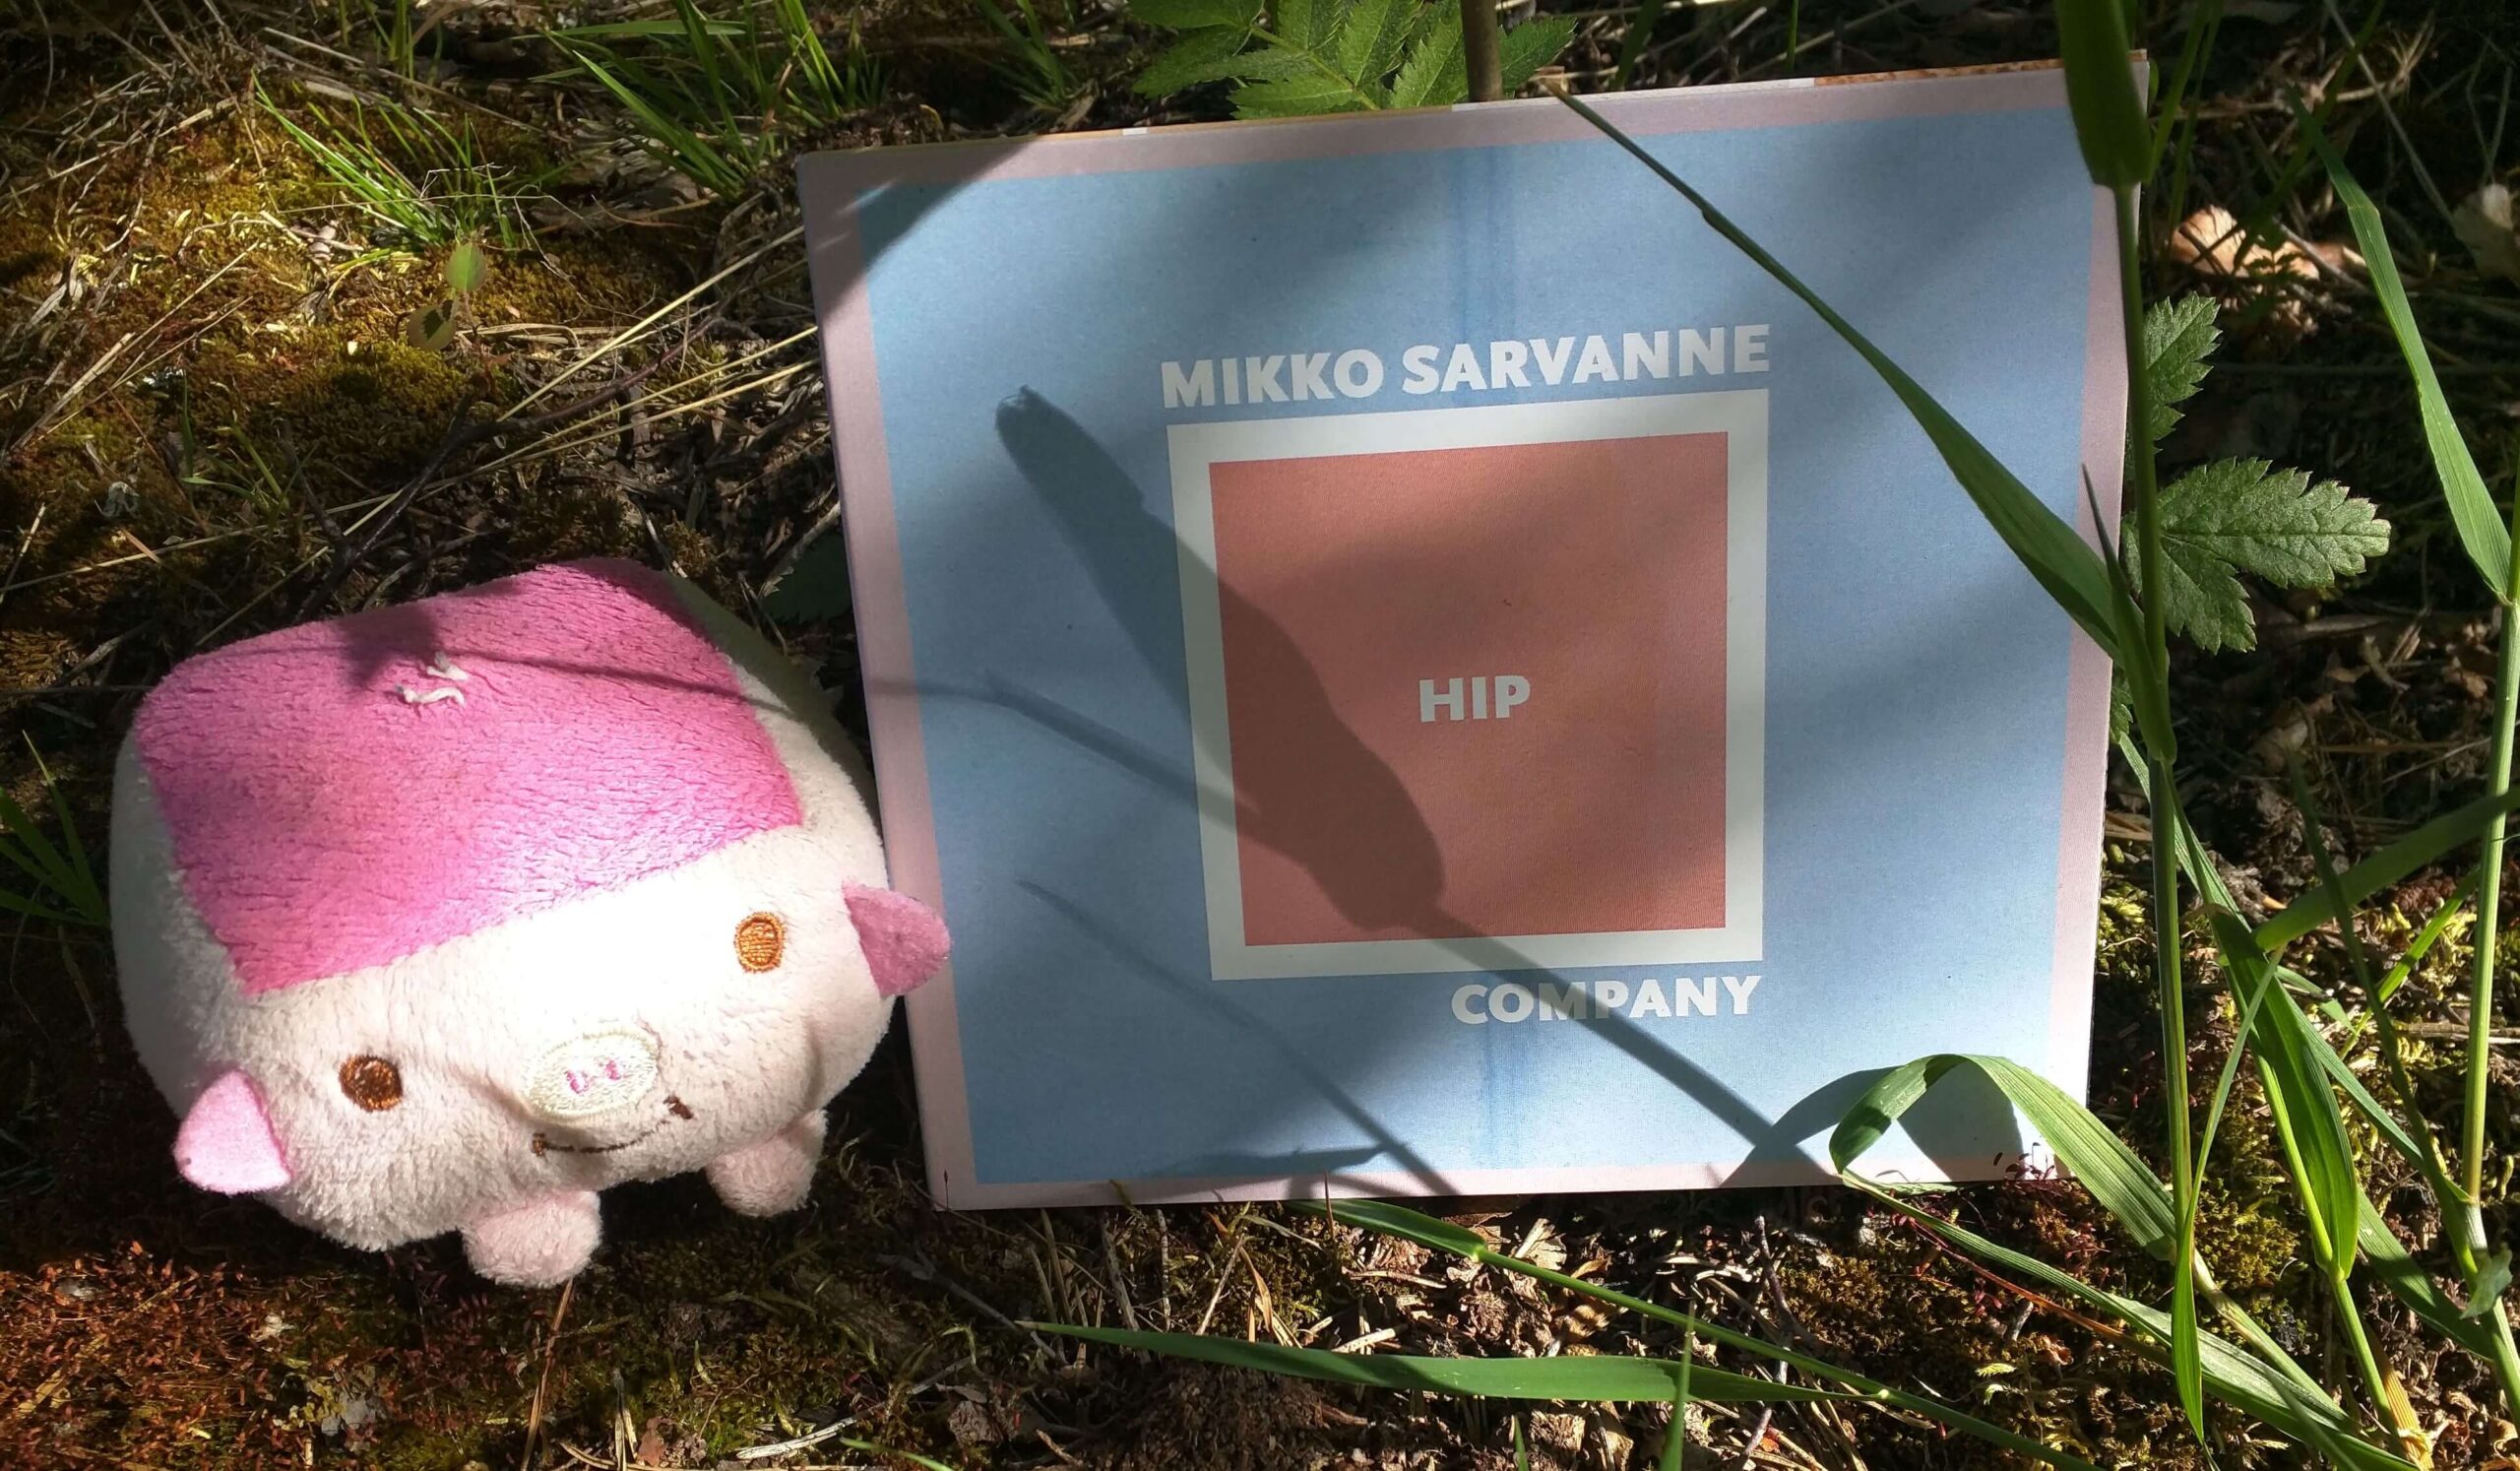 Mikko Sarvanne Hip Company – Mikko Sarvanne Hip Company